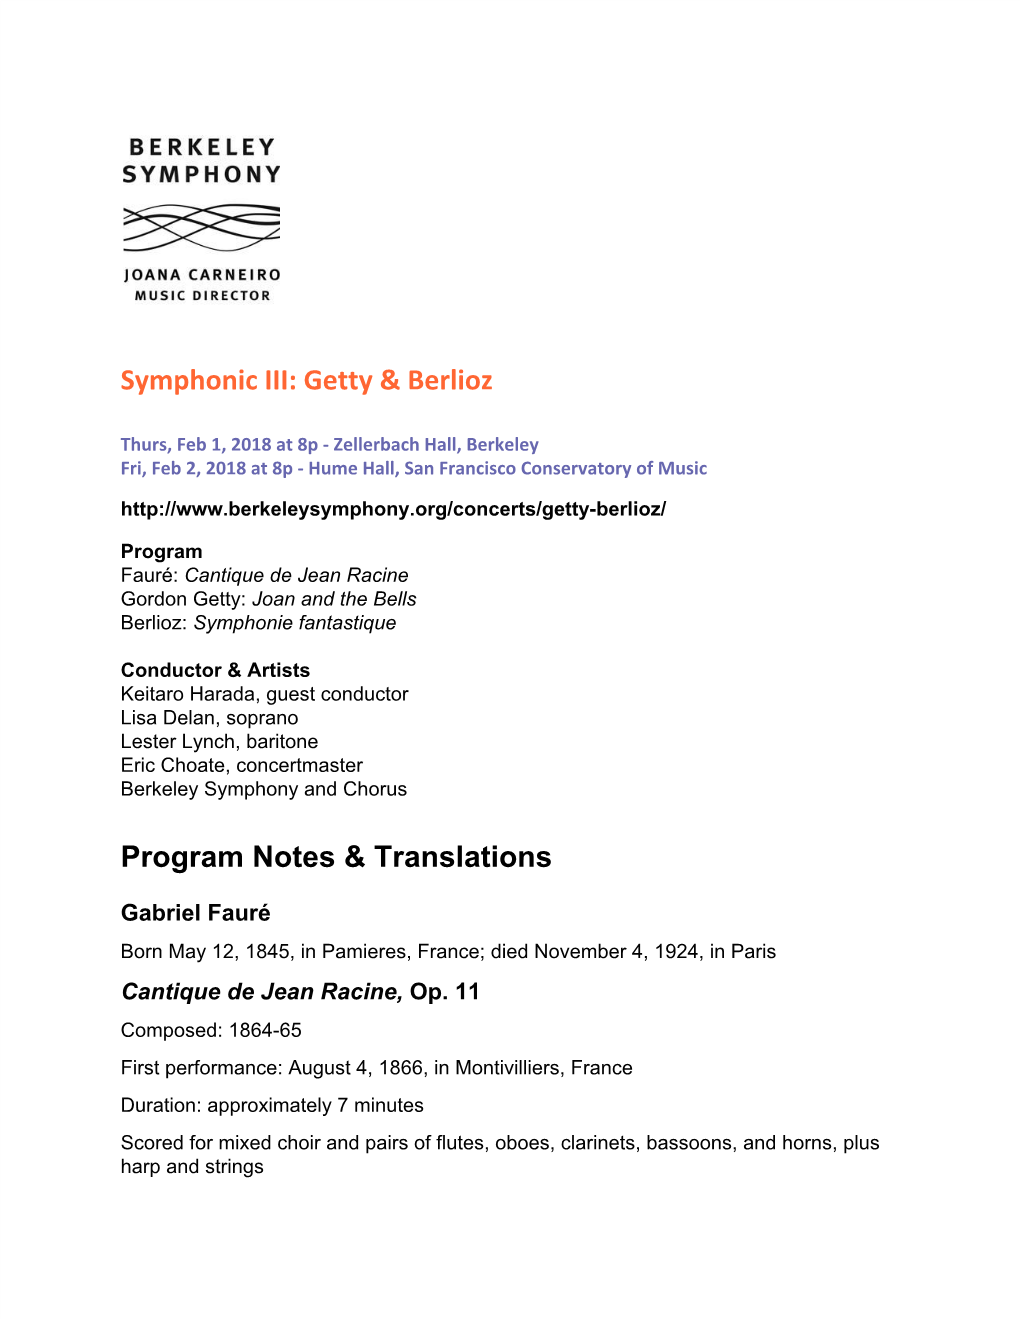 Symphonic III: Getty & Berlioz Program Notes & Translations